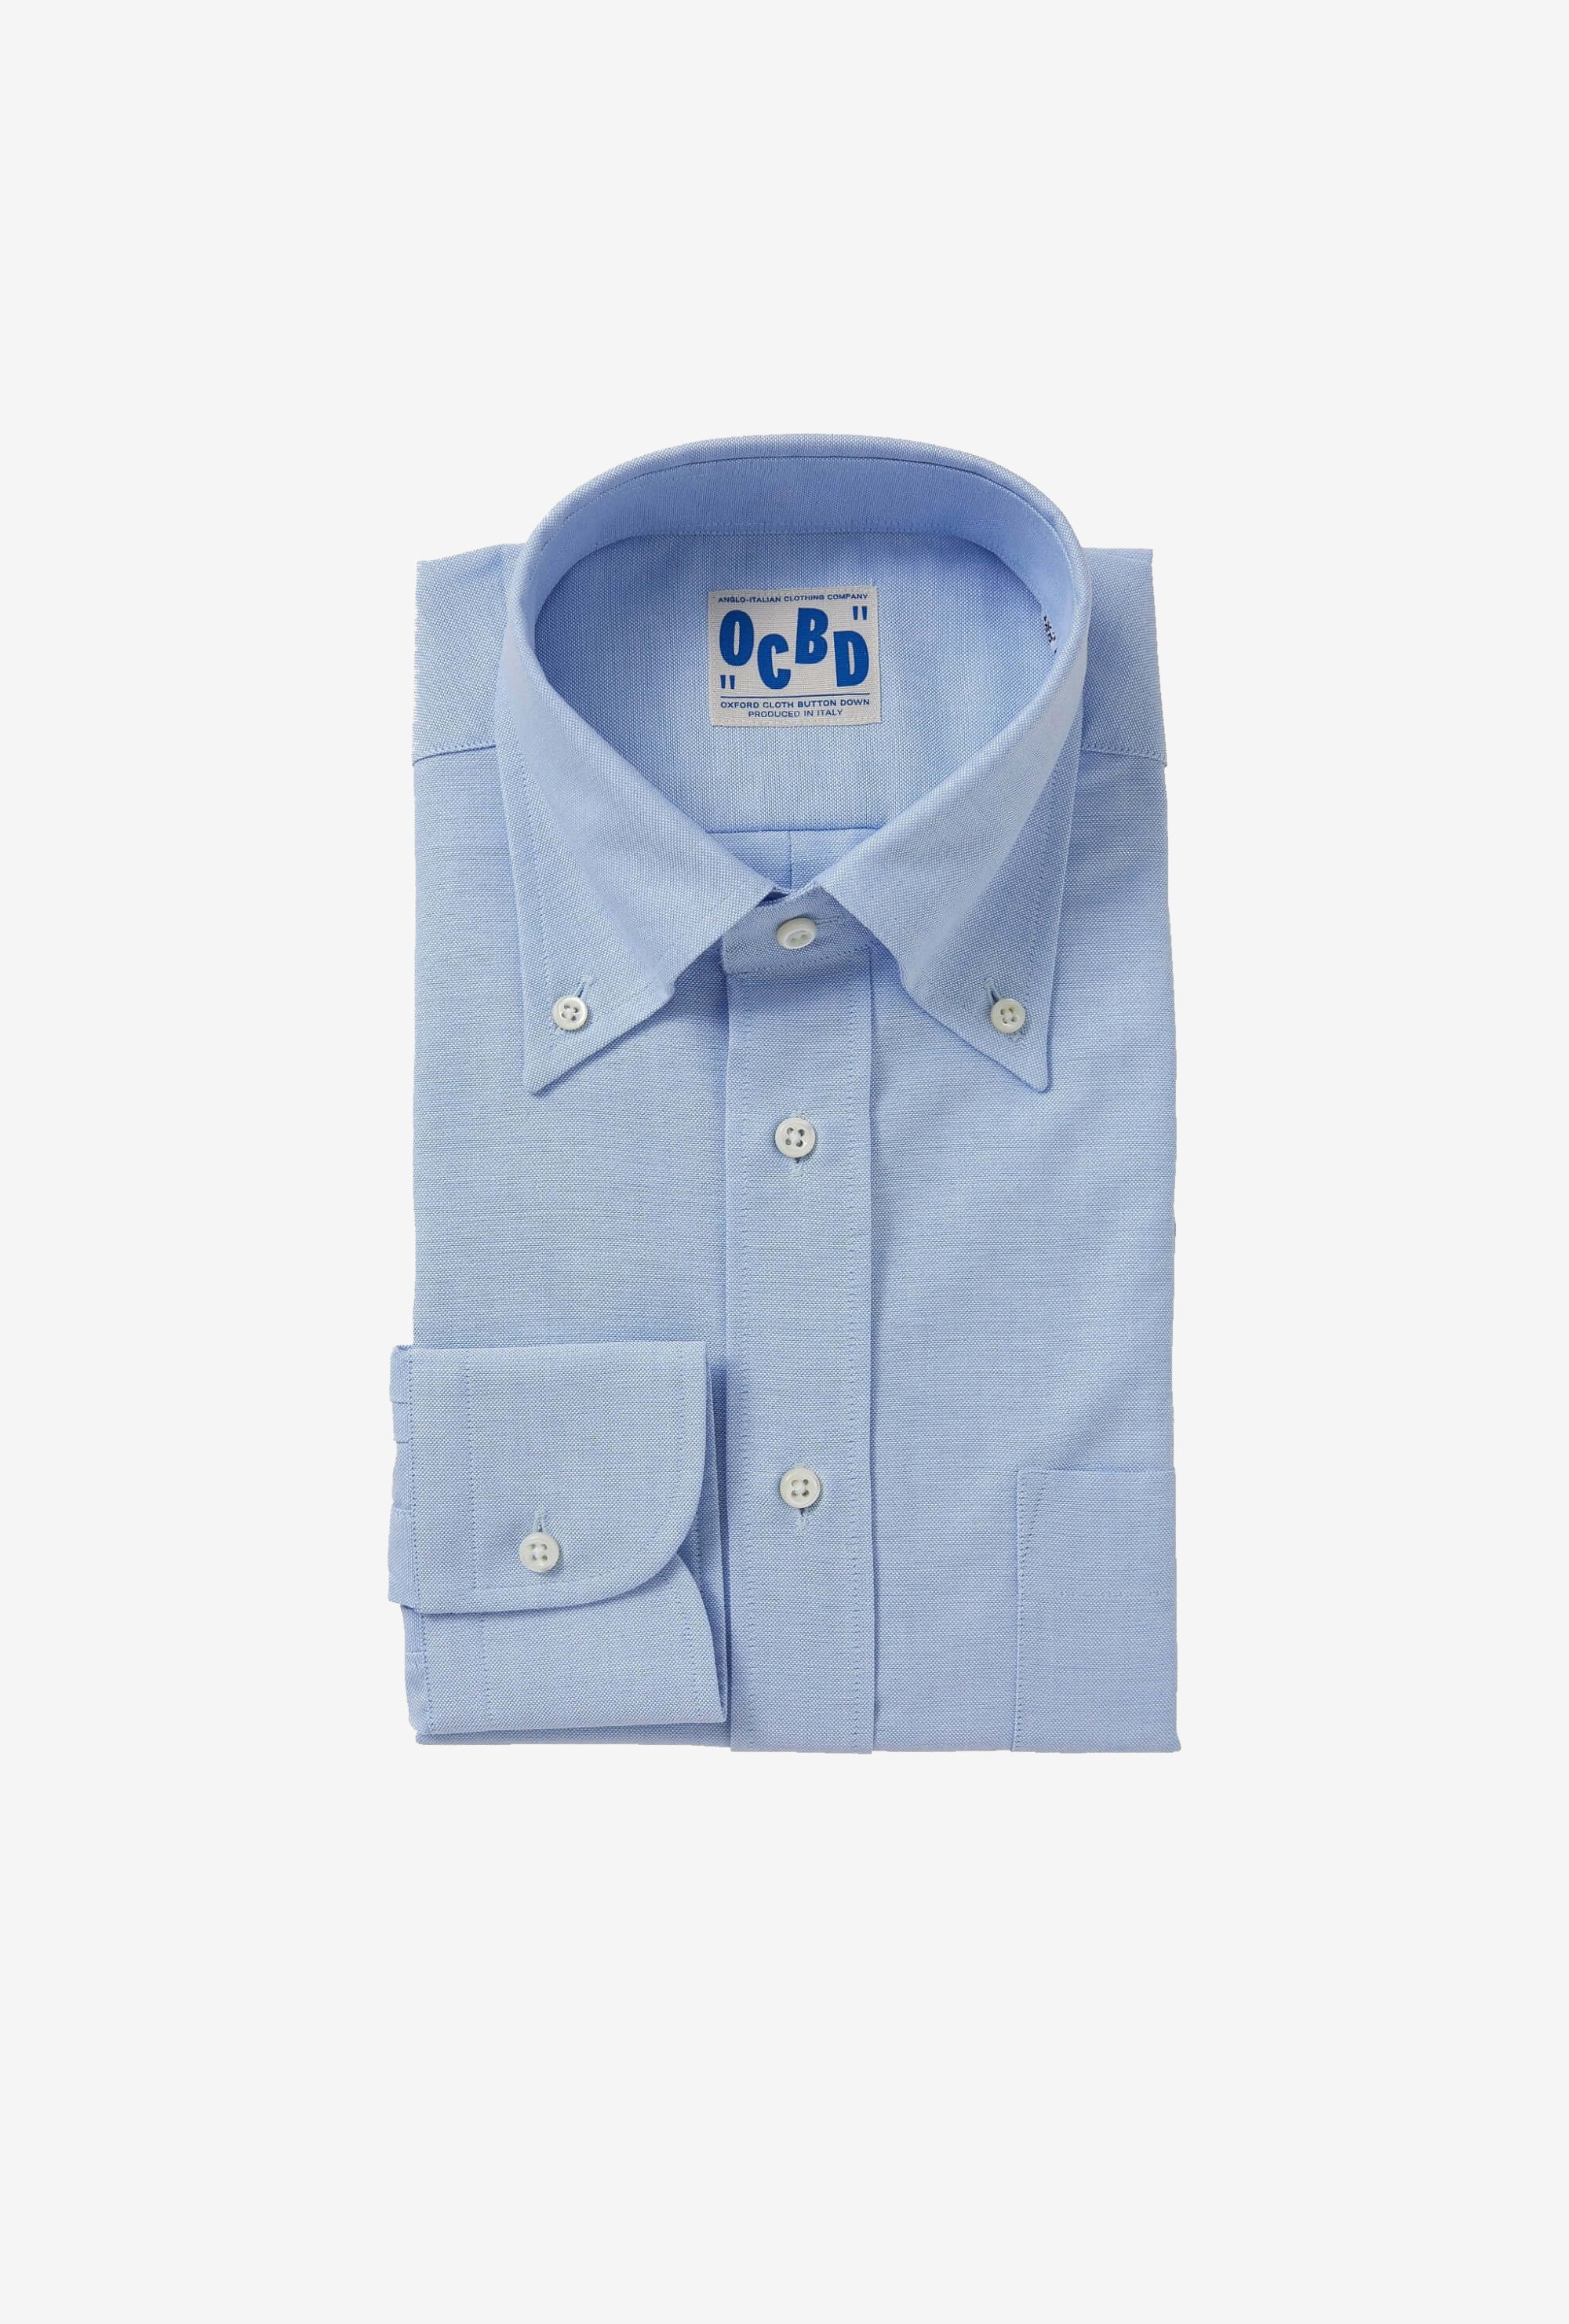 OCBD Shirt Blue Oxford